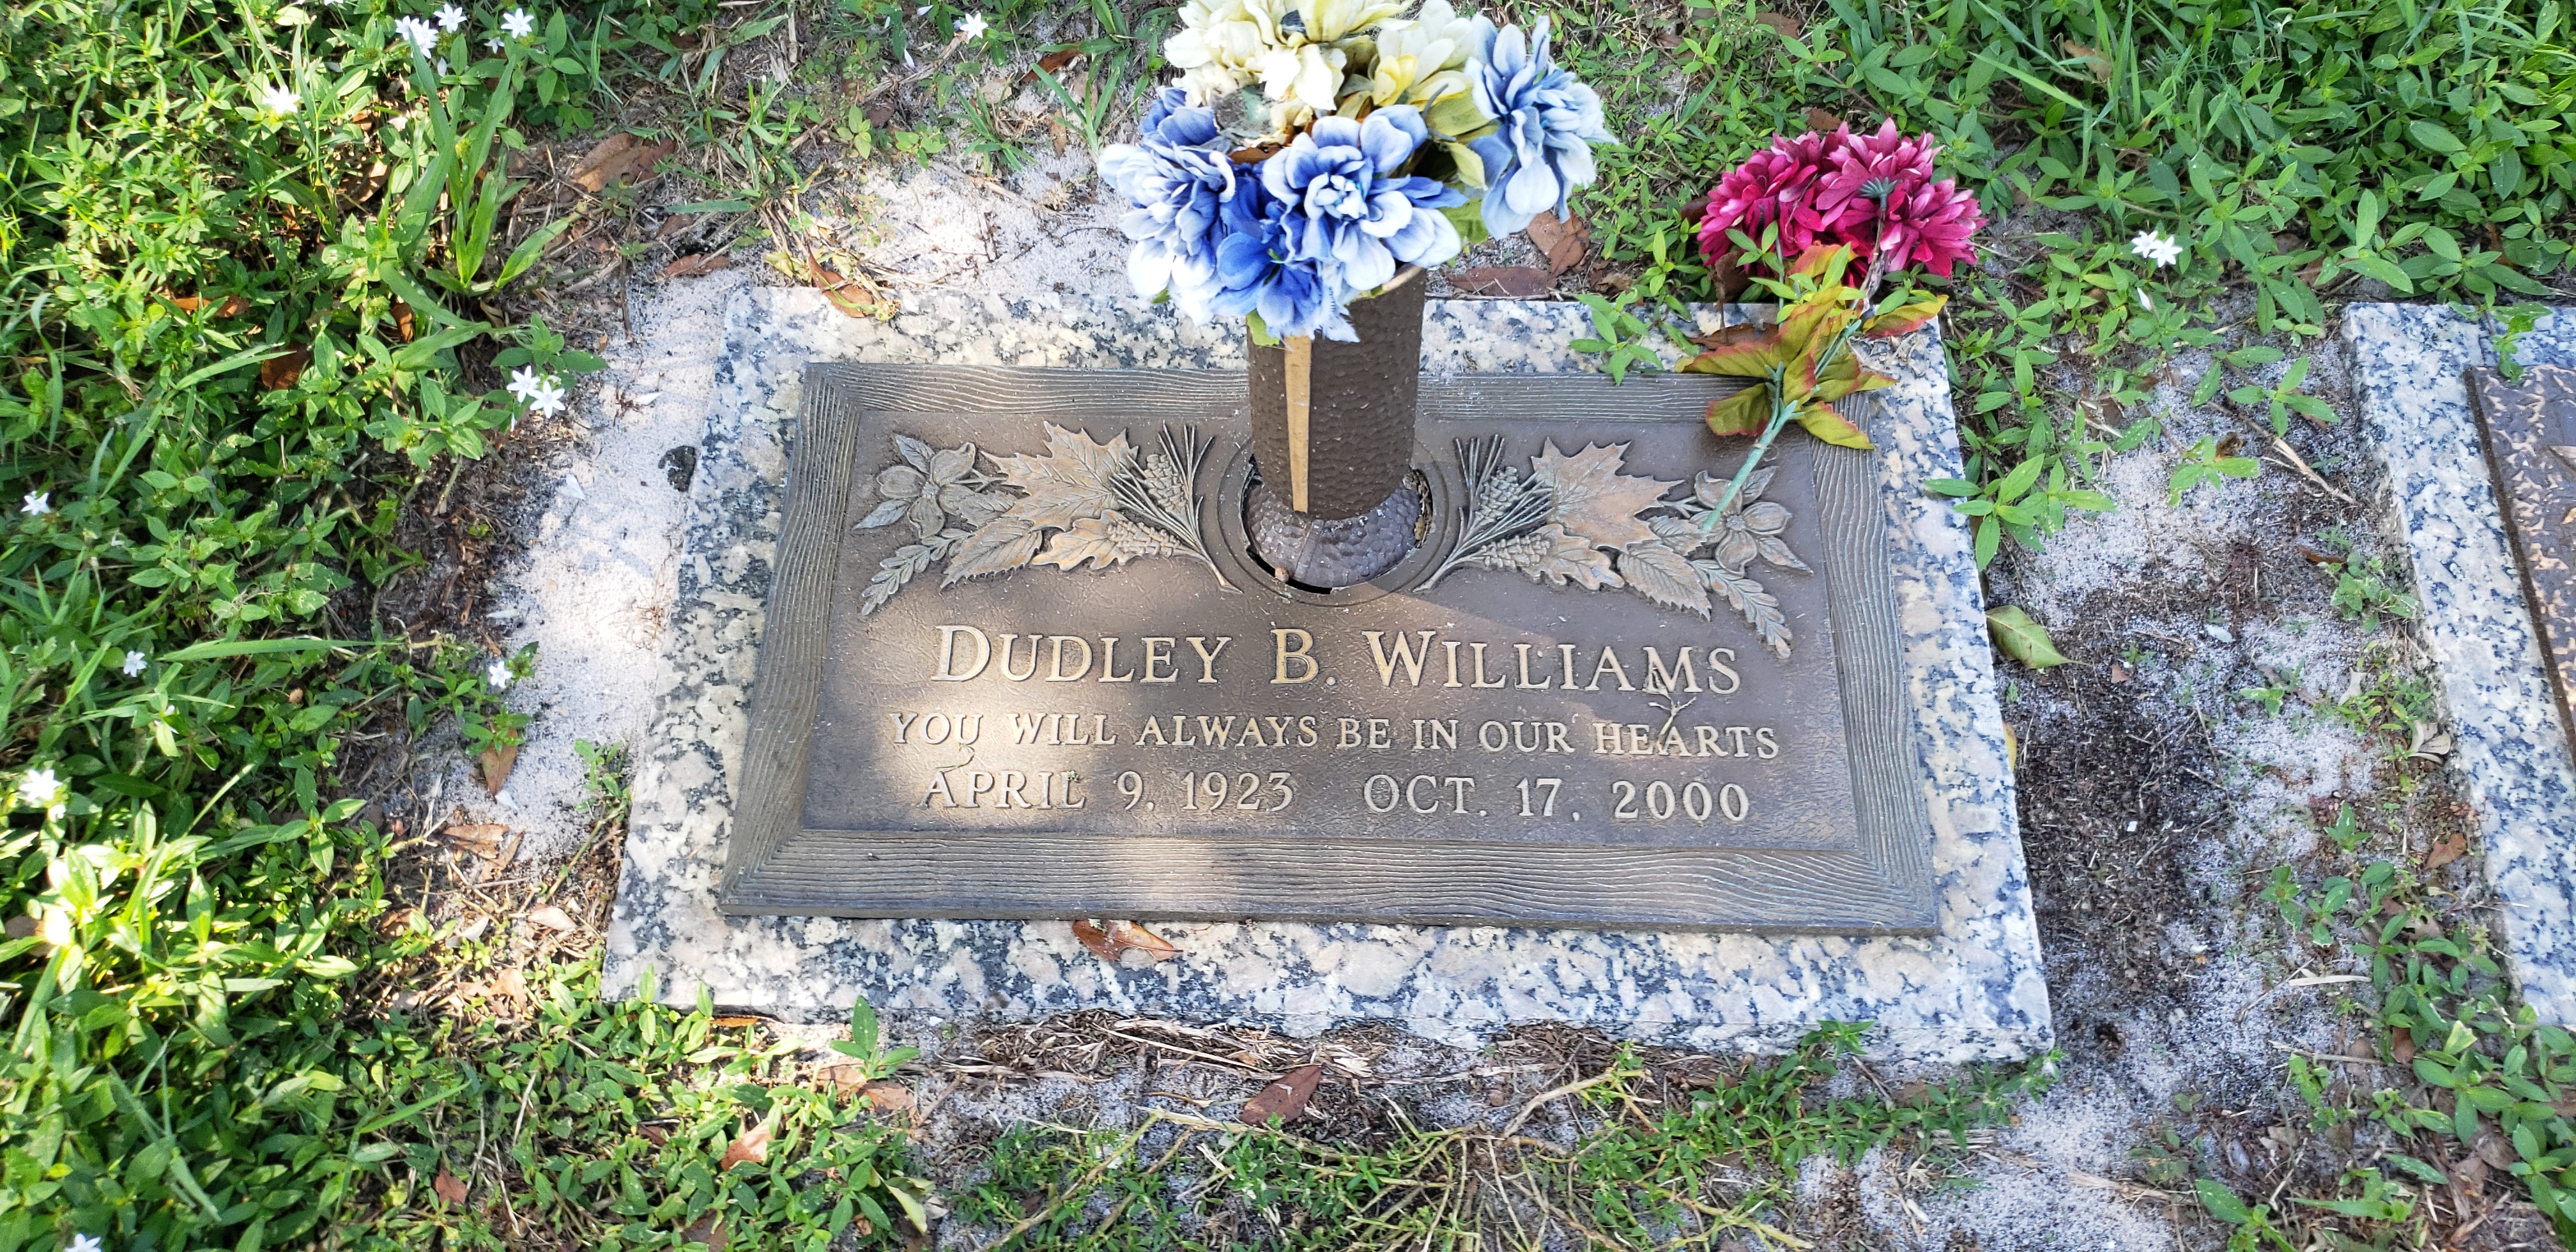 Dudley B Williams